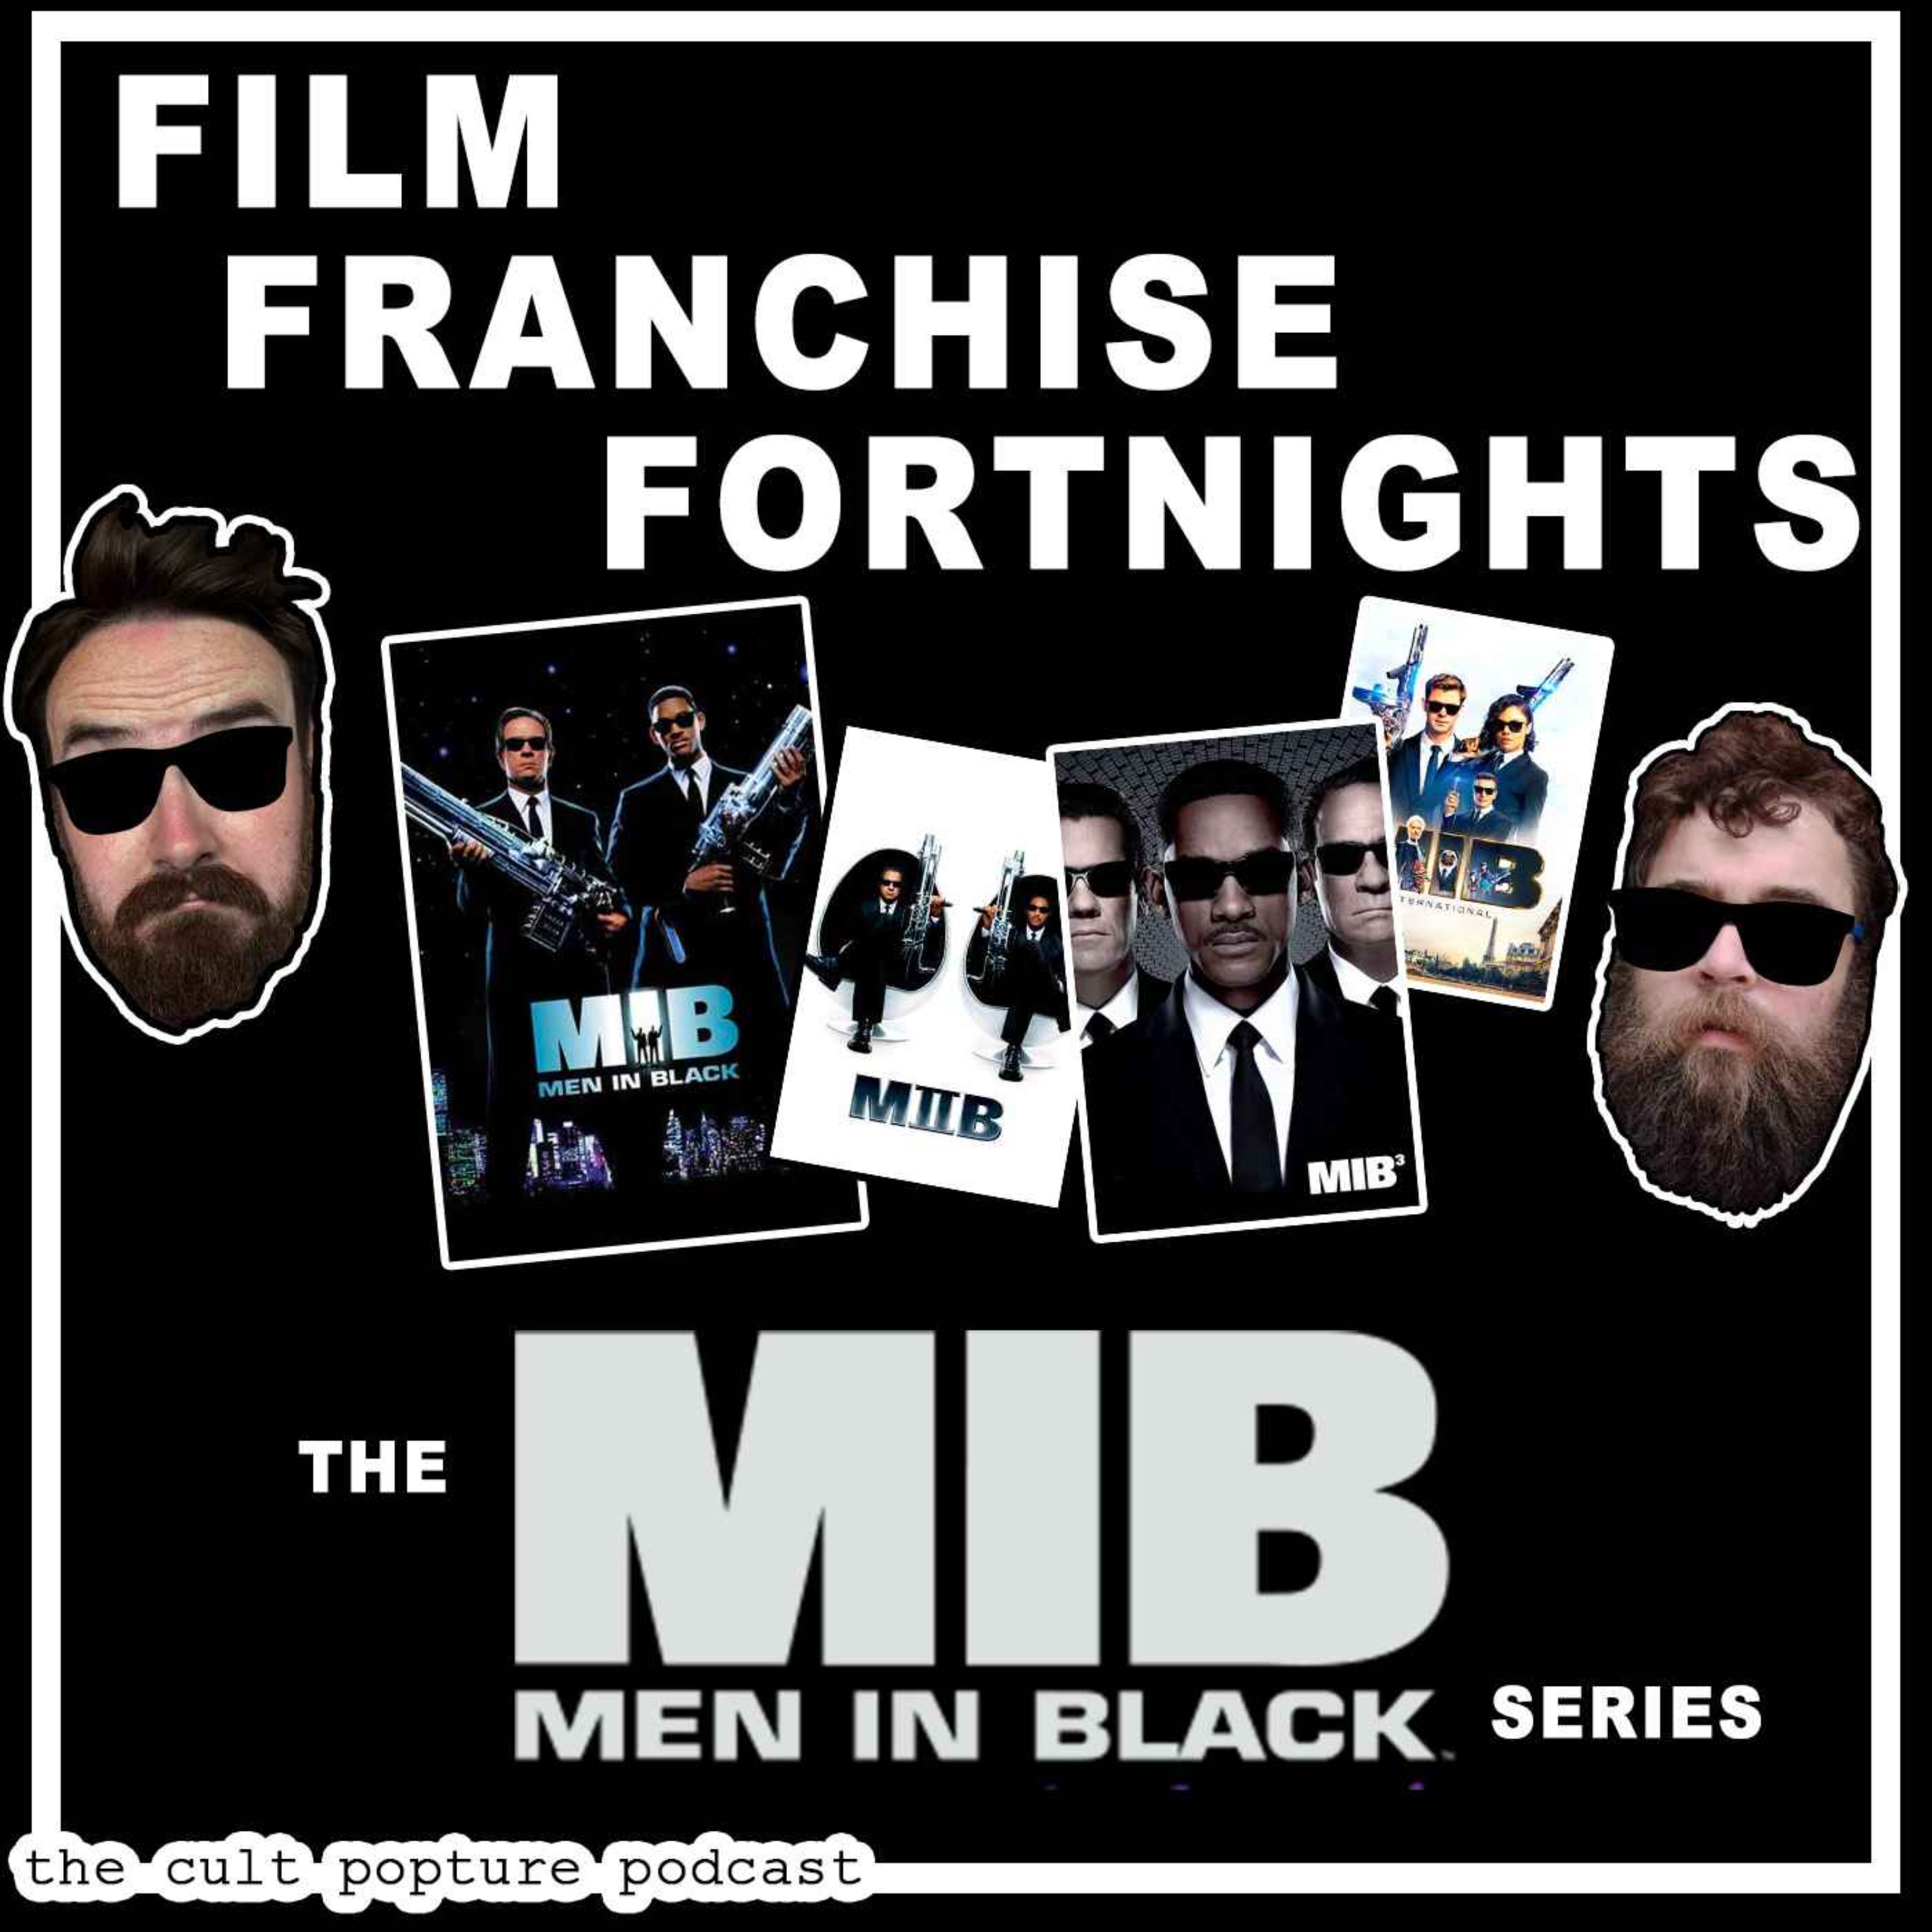 The ”Men in Black” Series | Film Franchise Fortnights